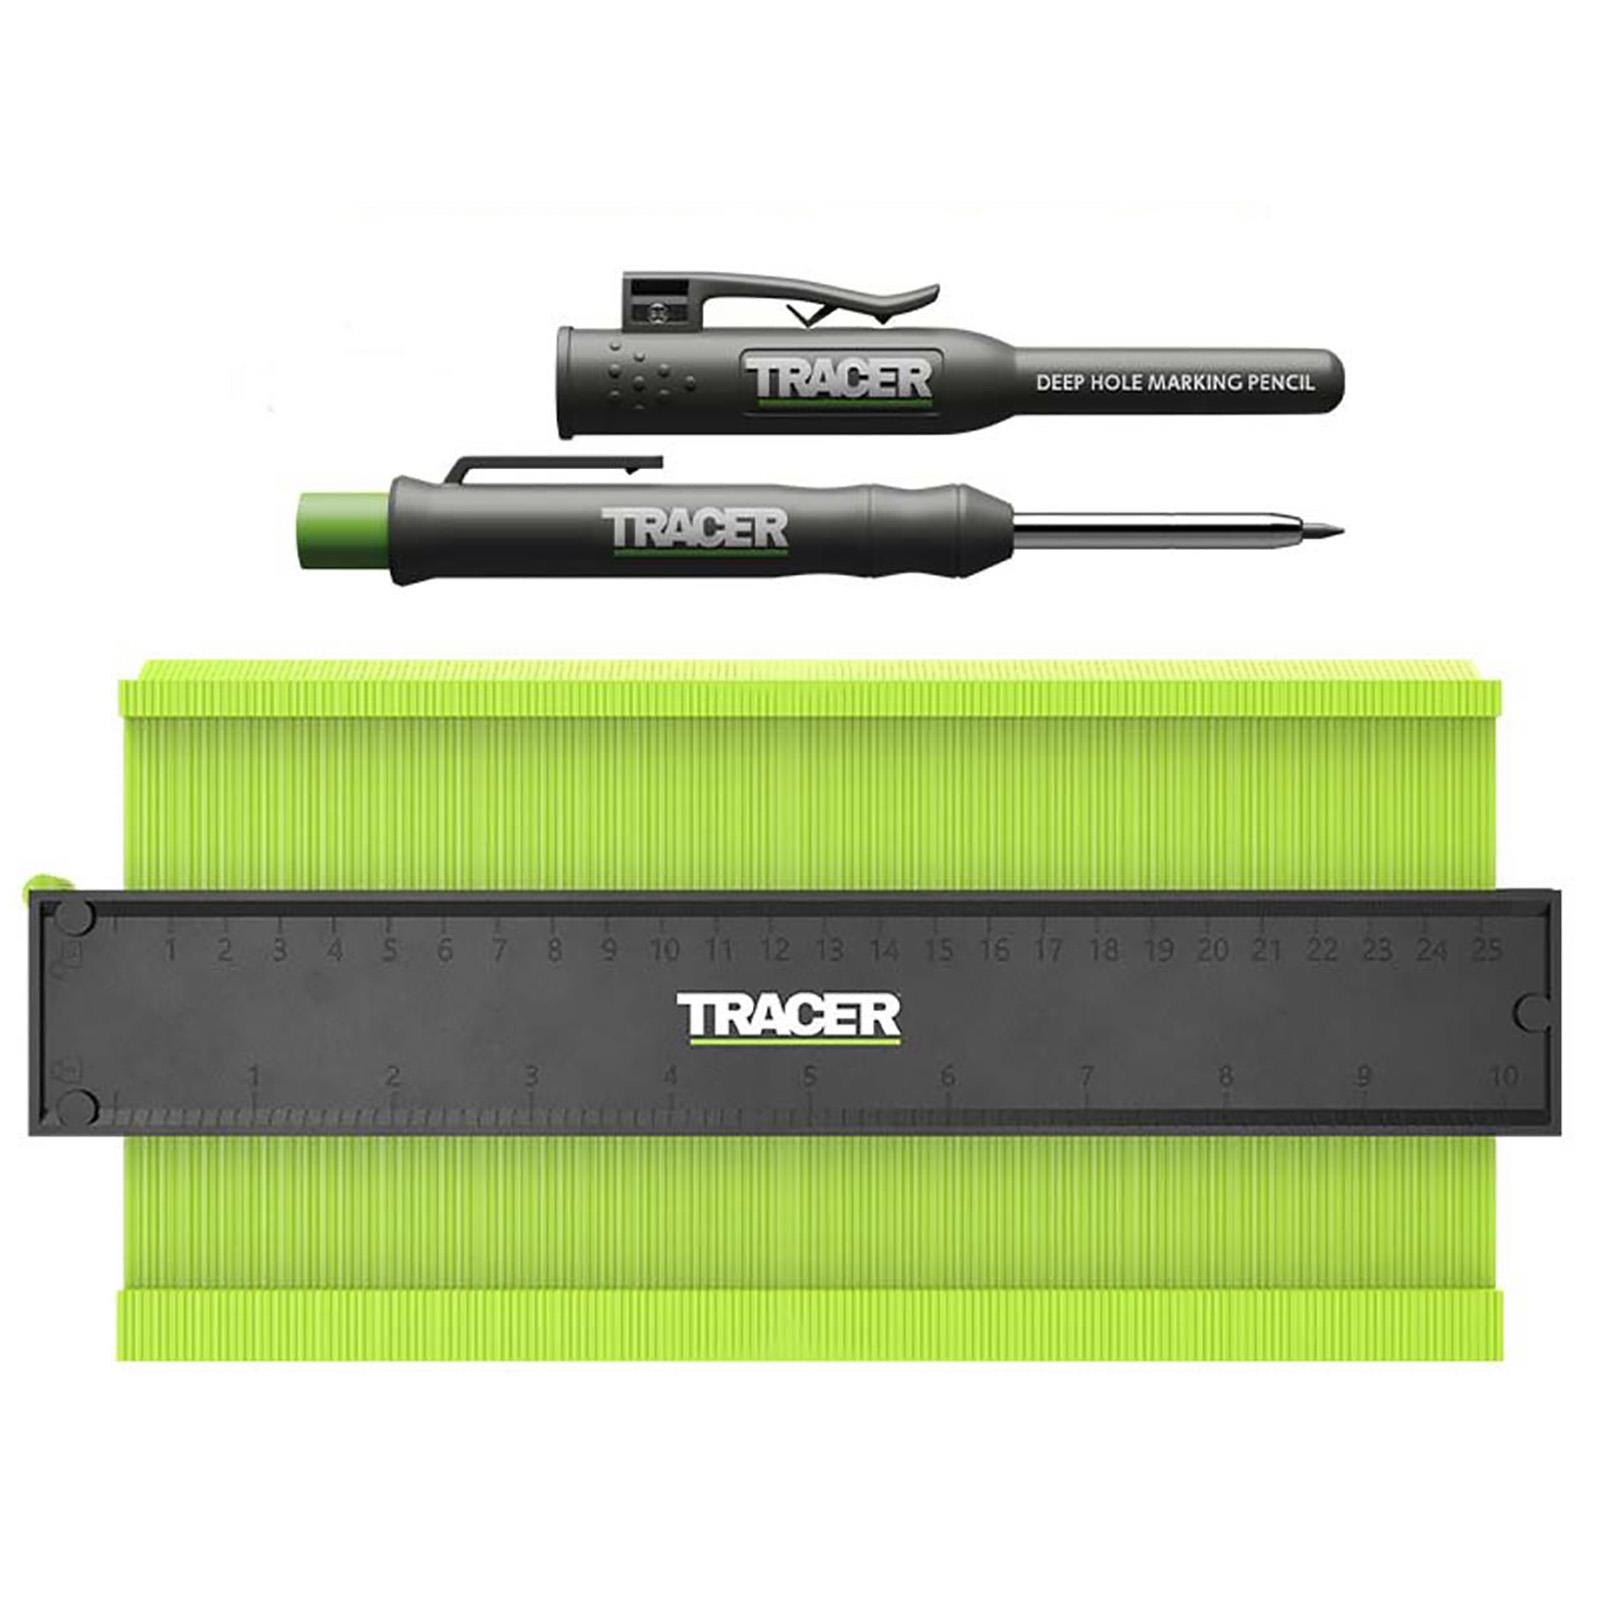 TRACER Procontour Gauge Marking Kit With Deep Hole Pencil 250mm 10